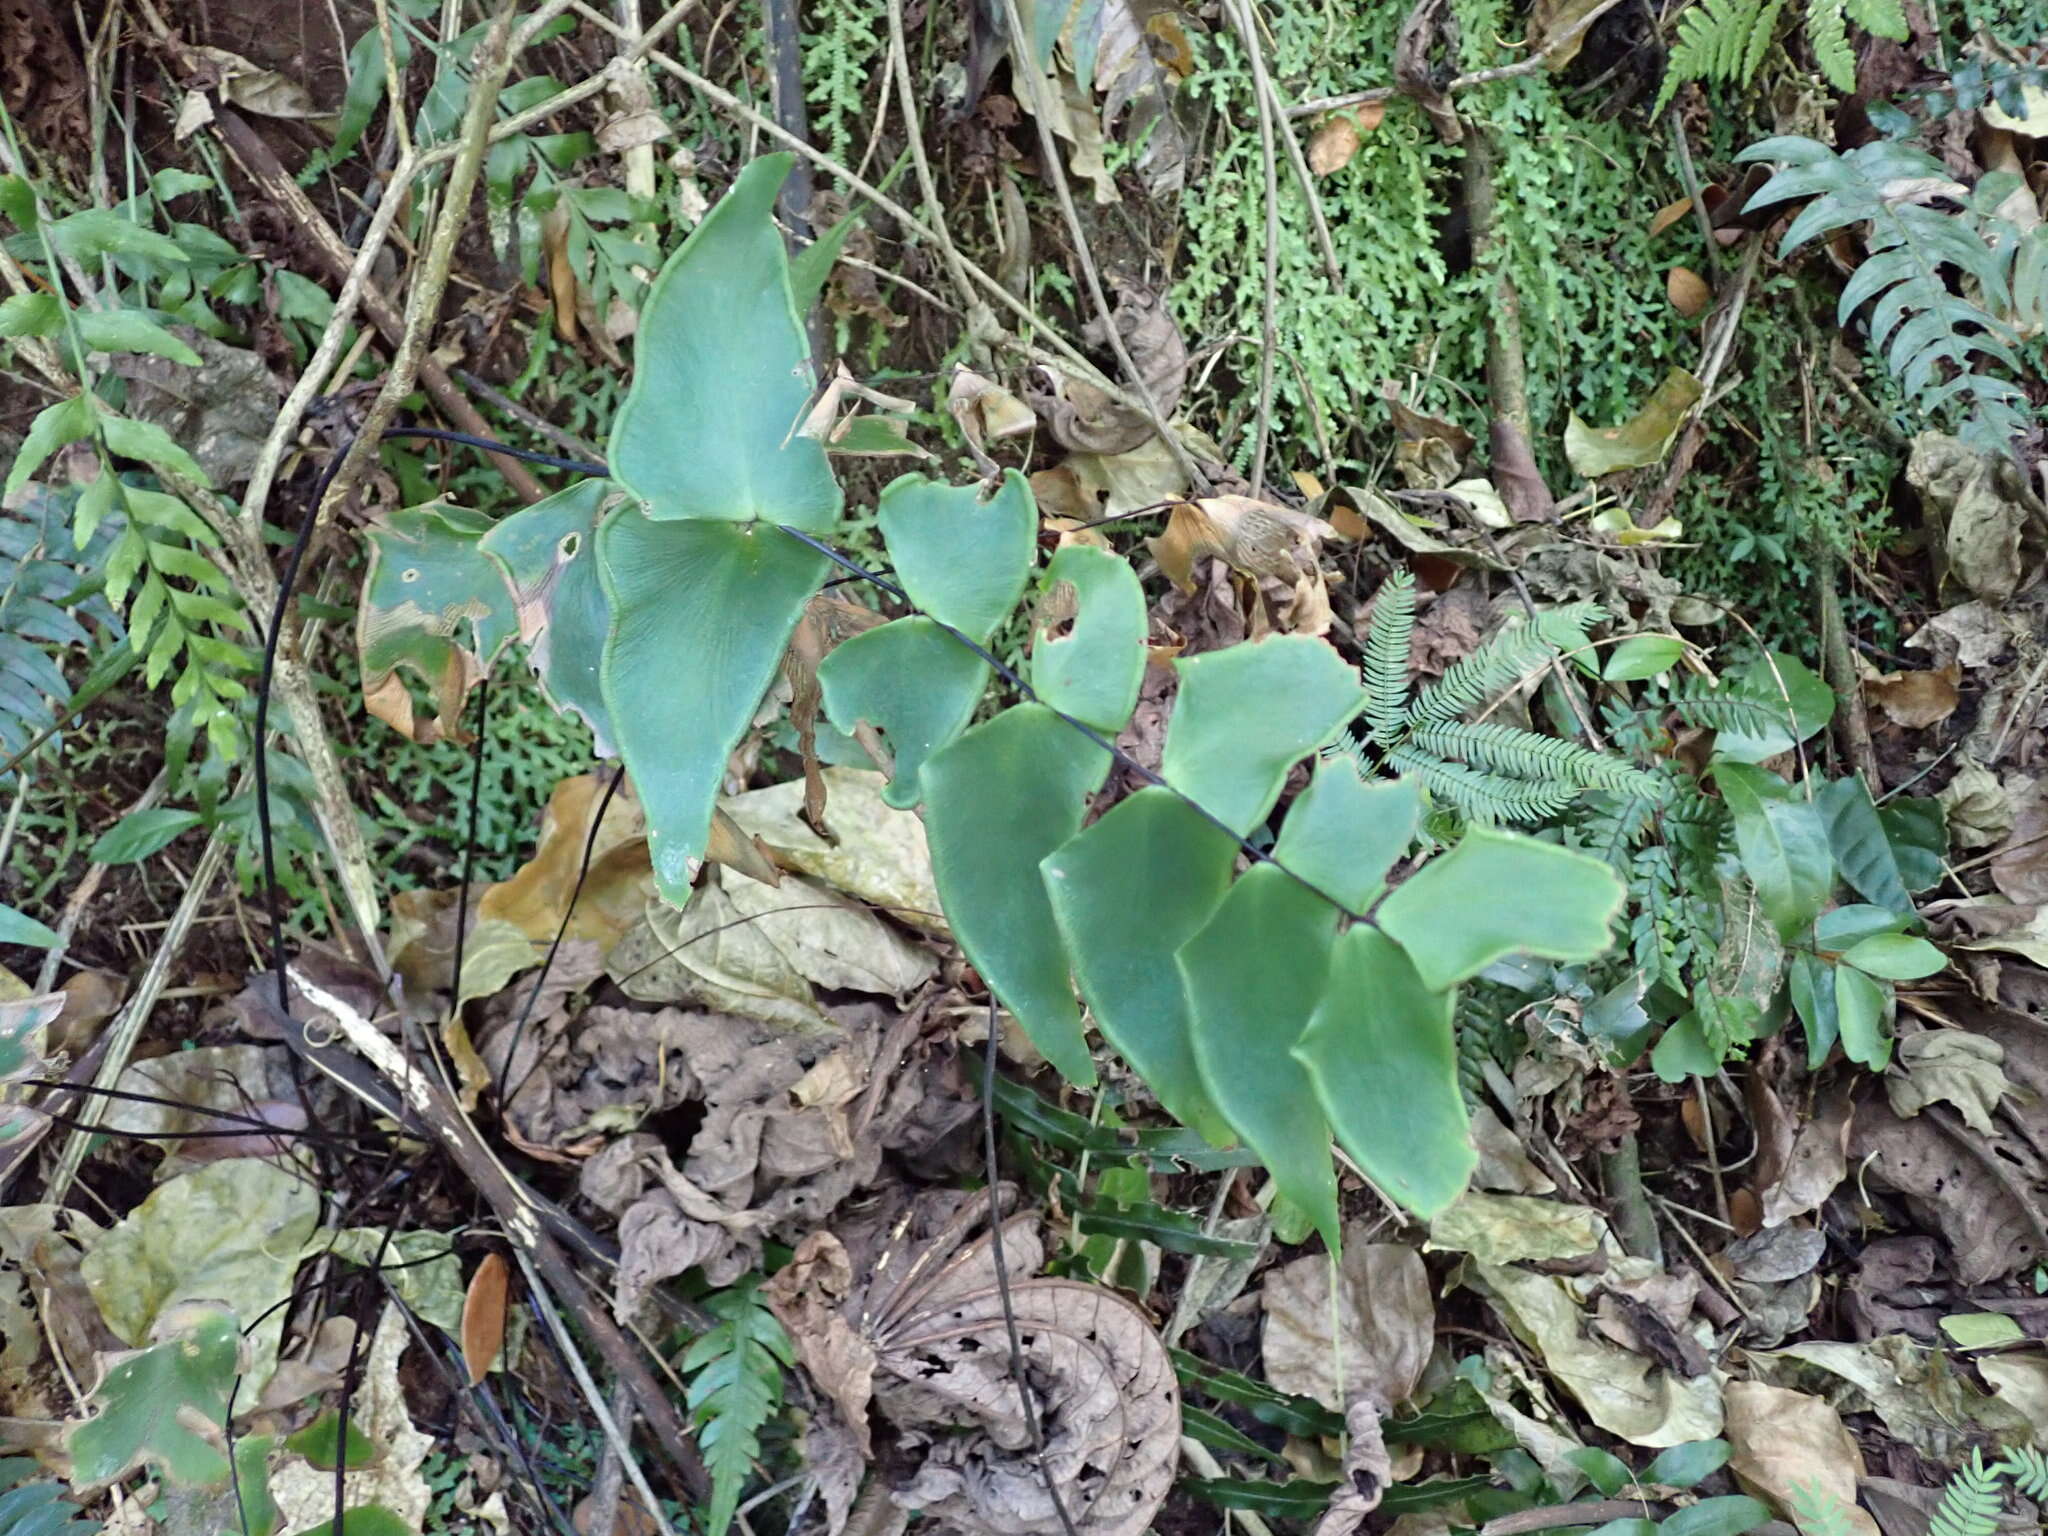 Image of Large-Leaf Maidenhair